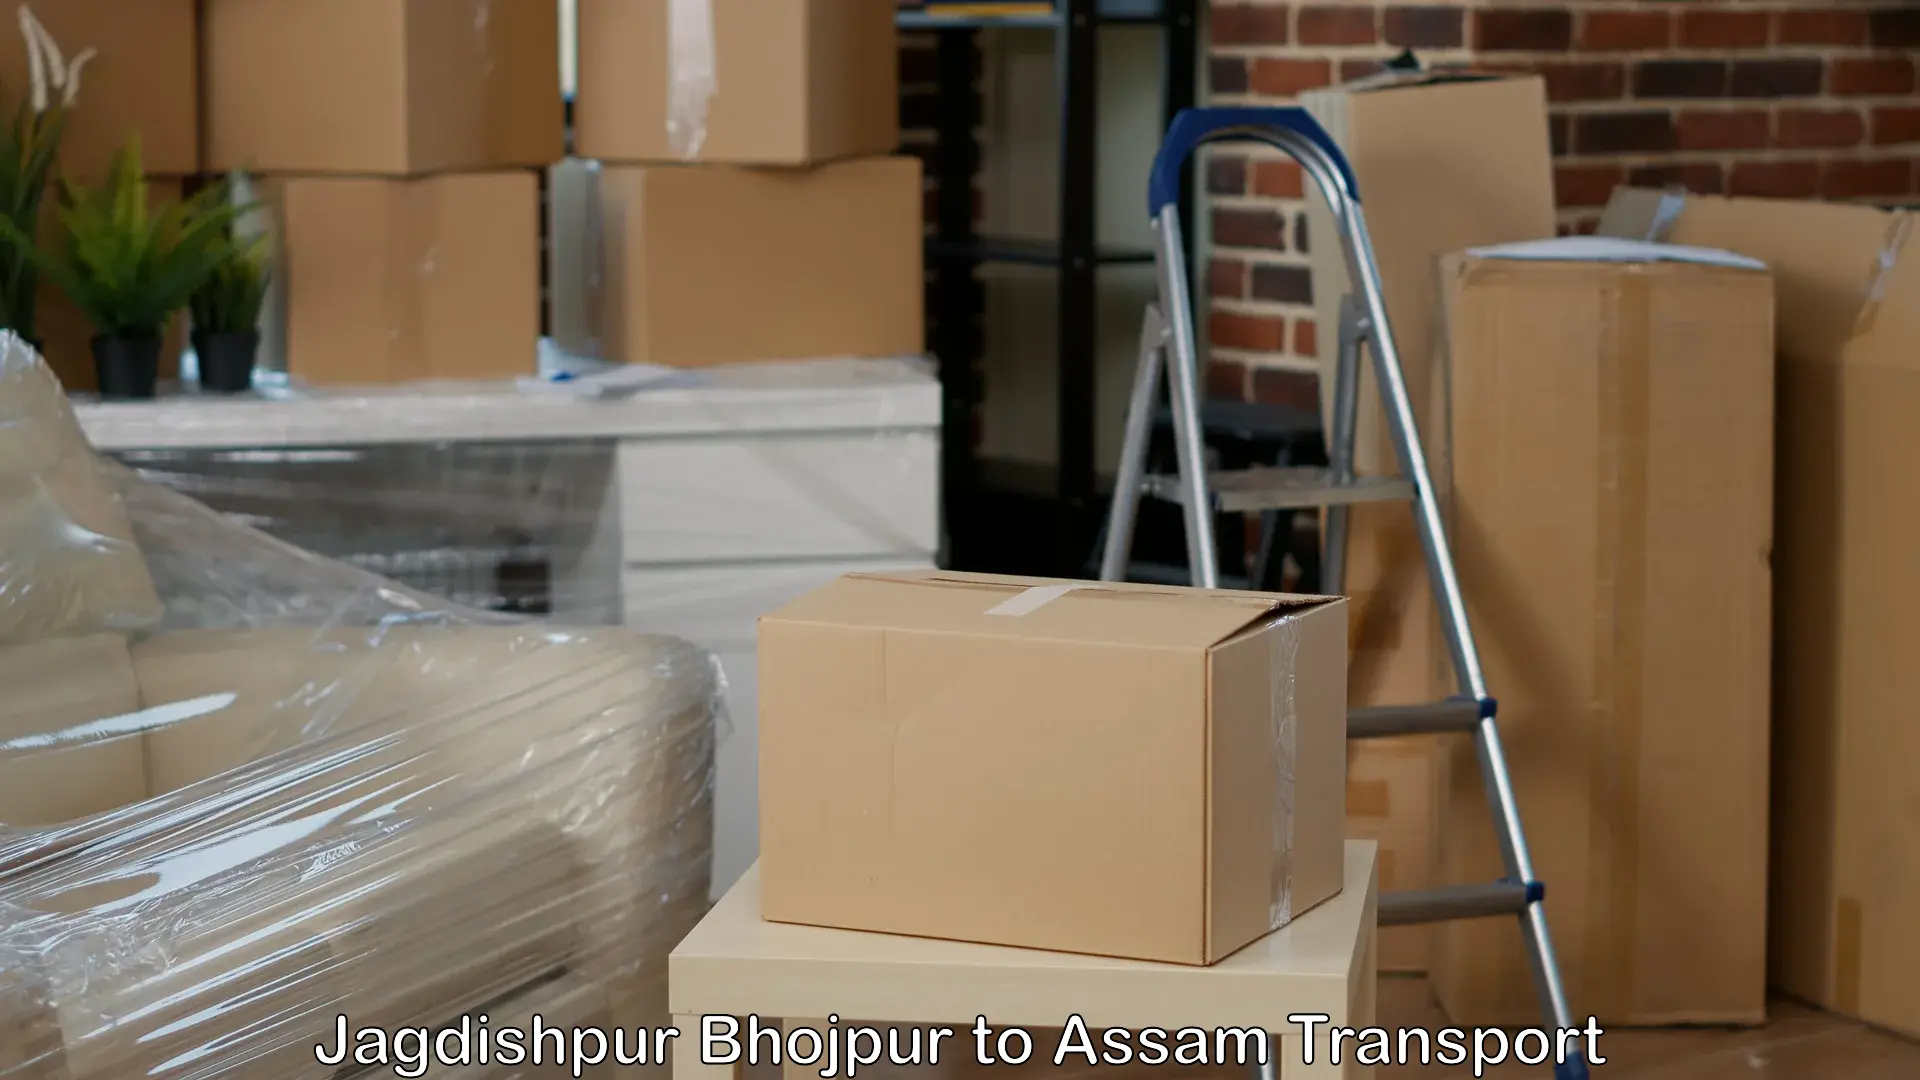 Truck transport companies in India Jagdishpur Bhojpur to Baksha Bodoland